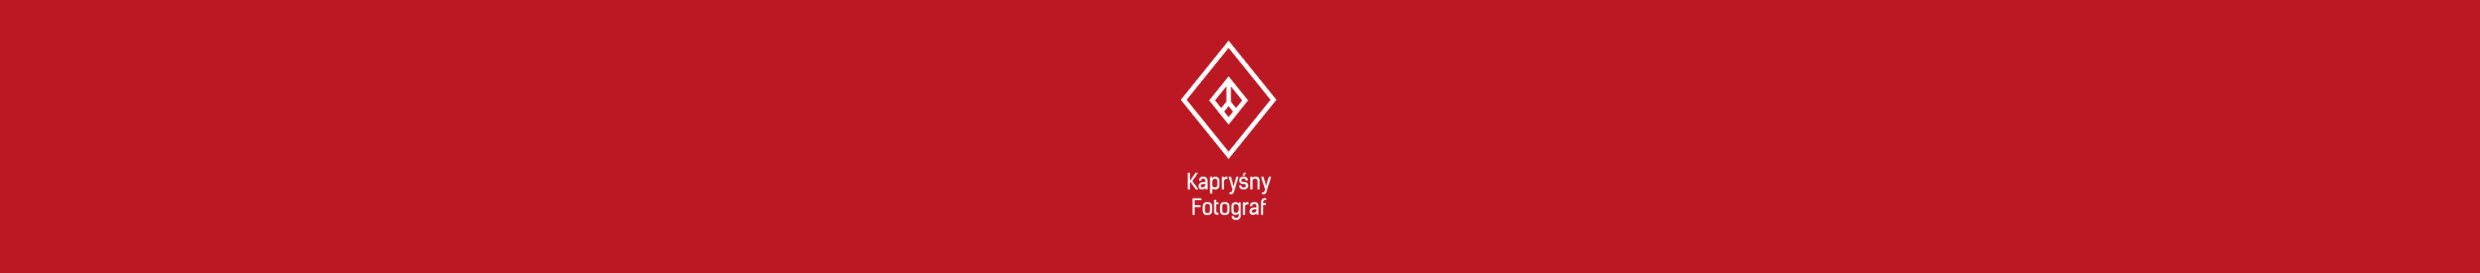 Marta Suszyńska's profile banner